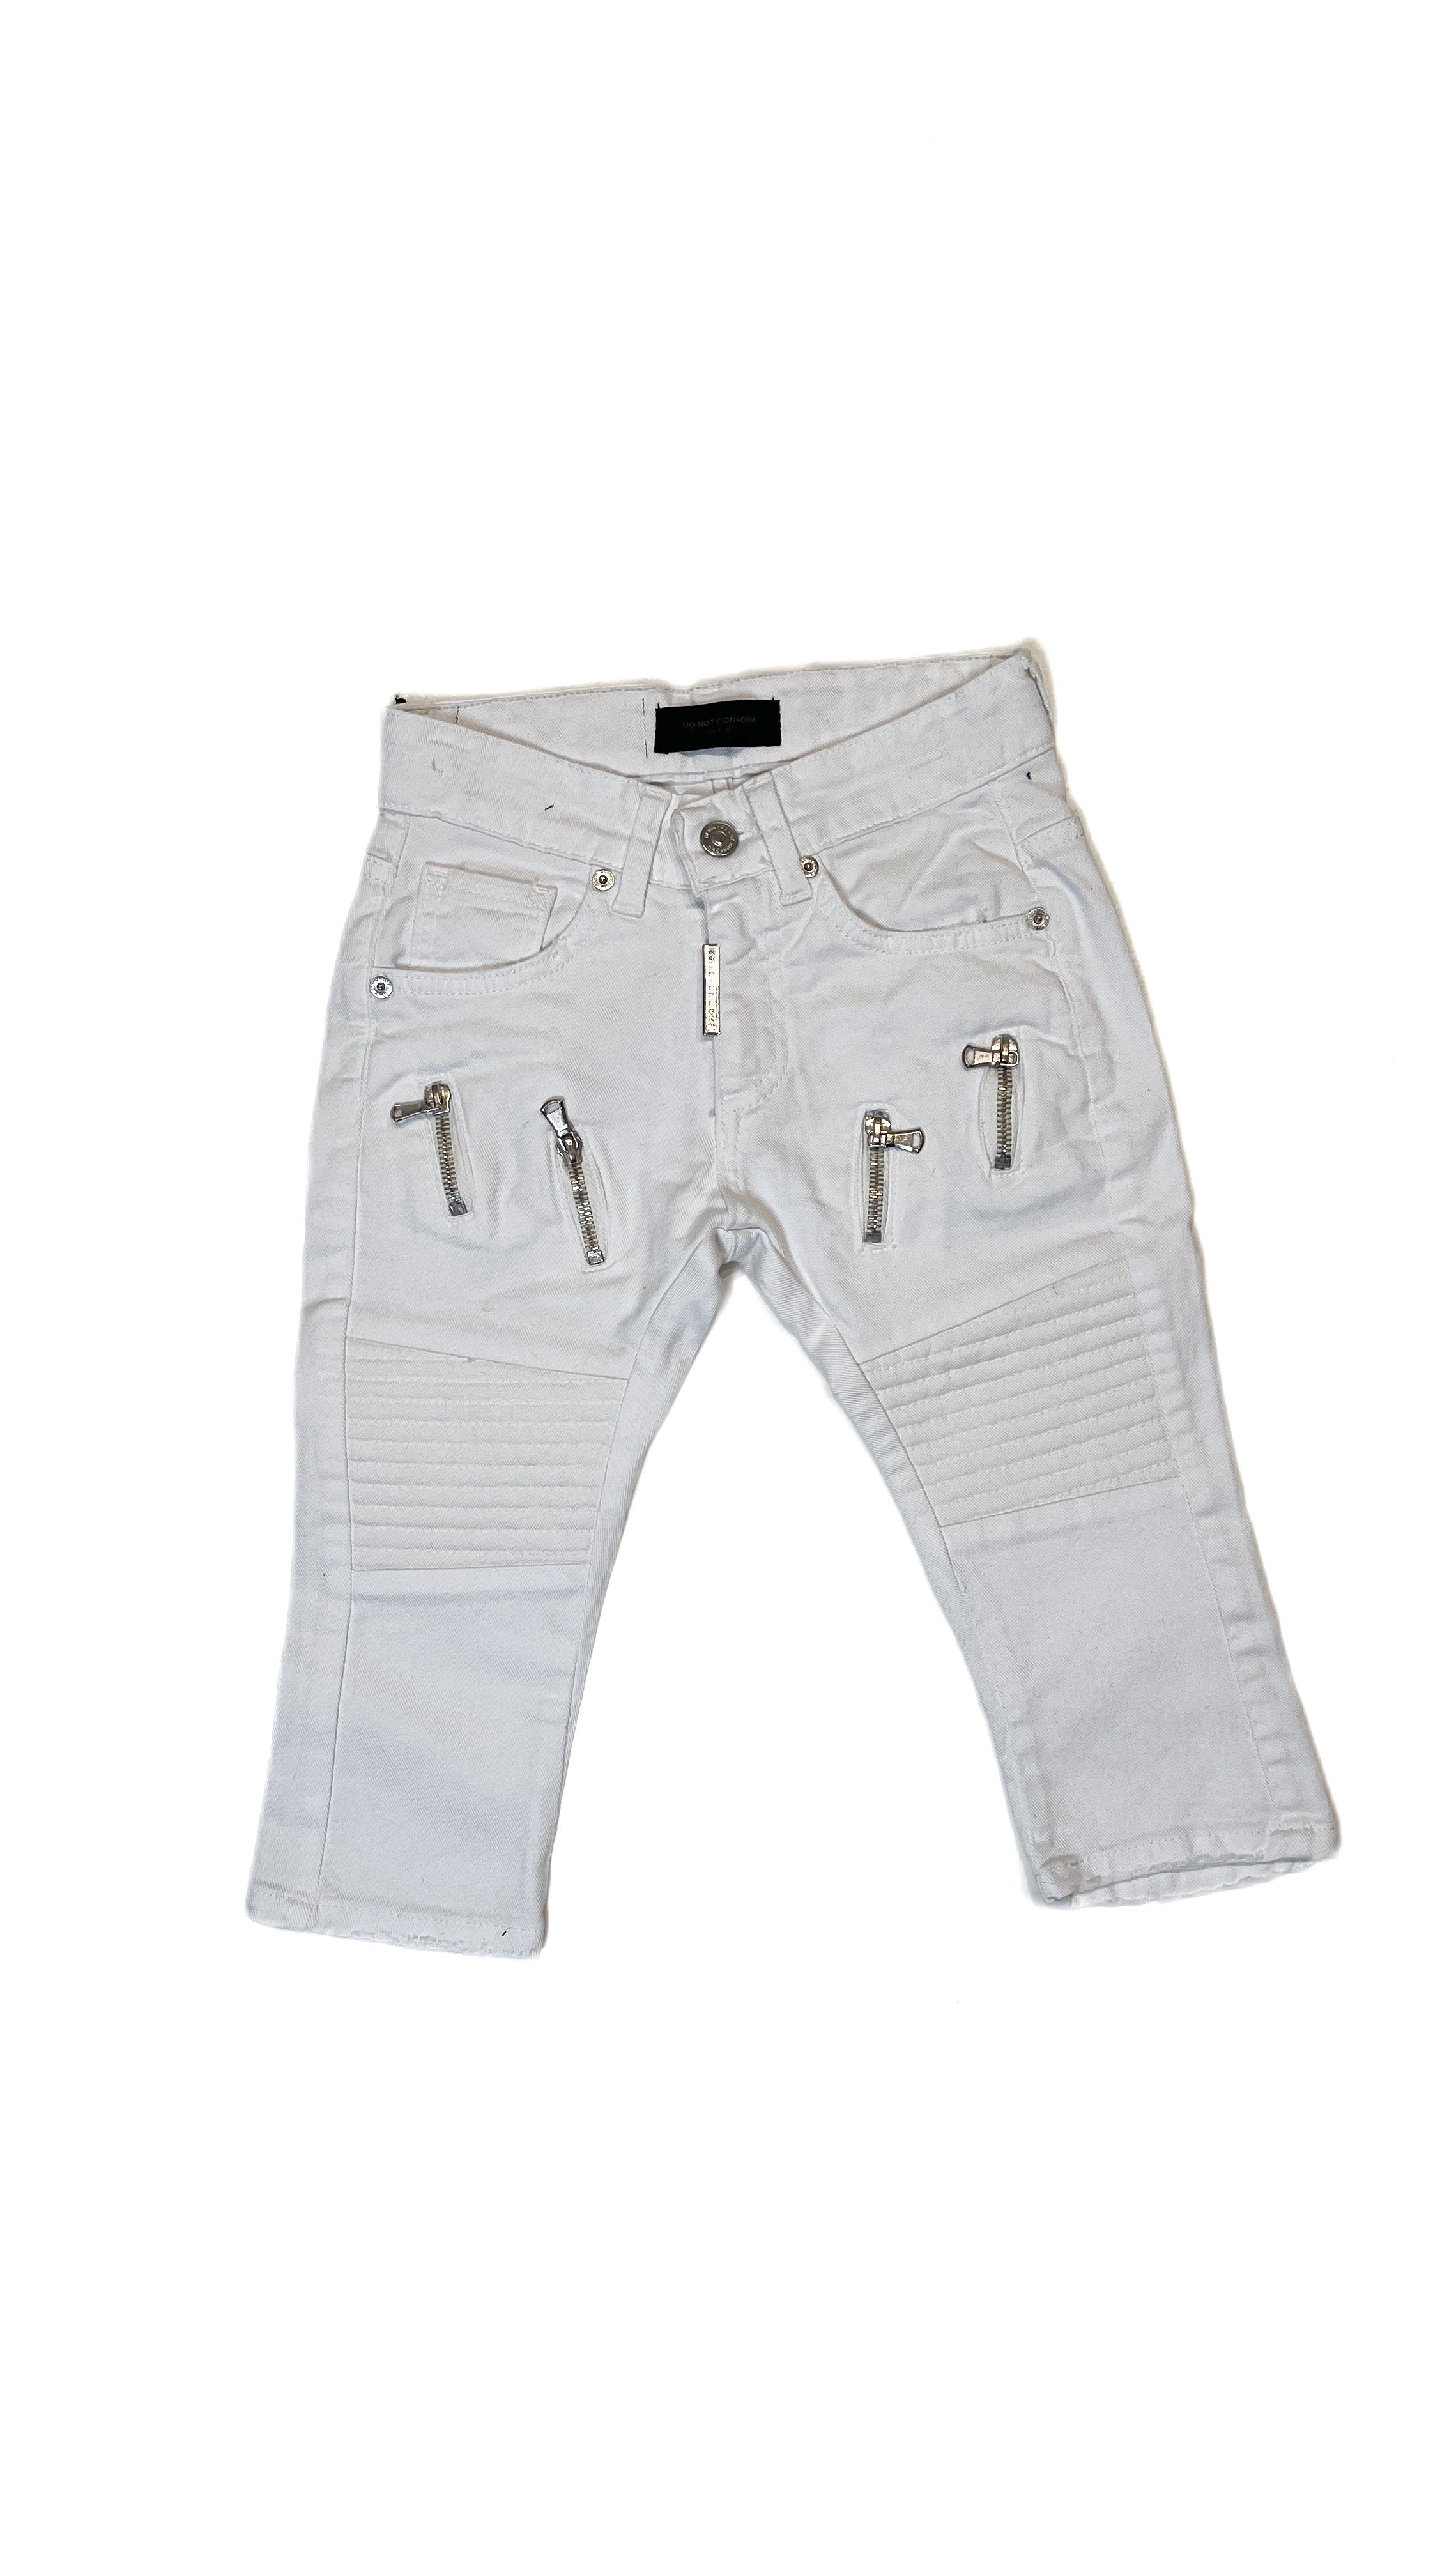 Do Not Conform jeans kids bianco con mini zip